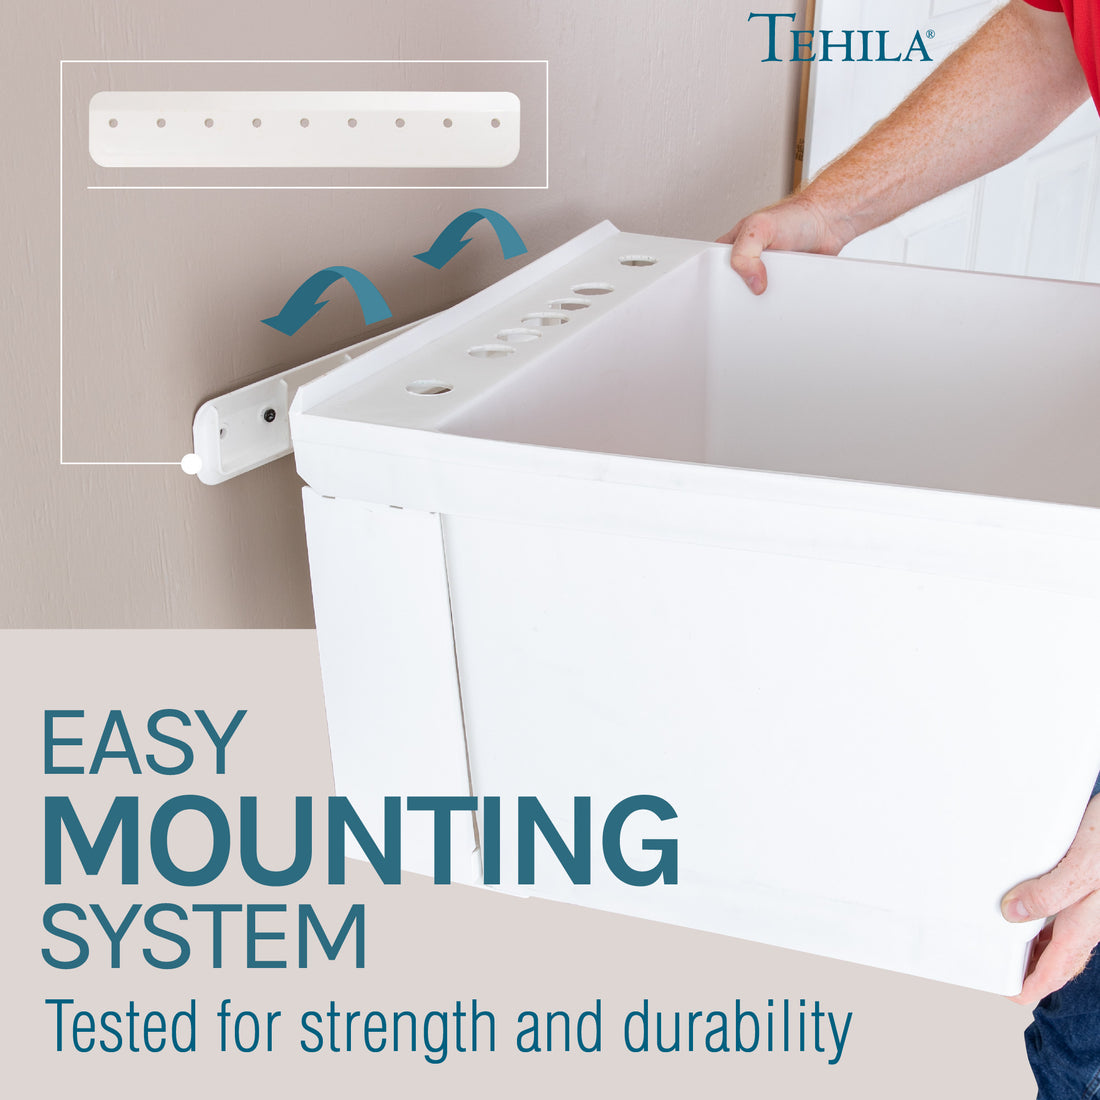 Tehila Standard Wall-Mounted White Utility Sink, Water Supply Lines Included - Utility sinks vanites Tehila